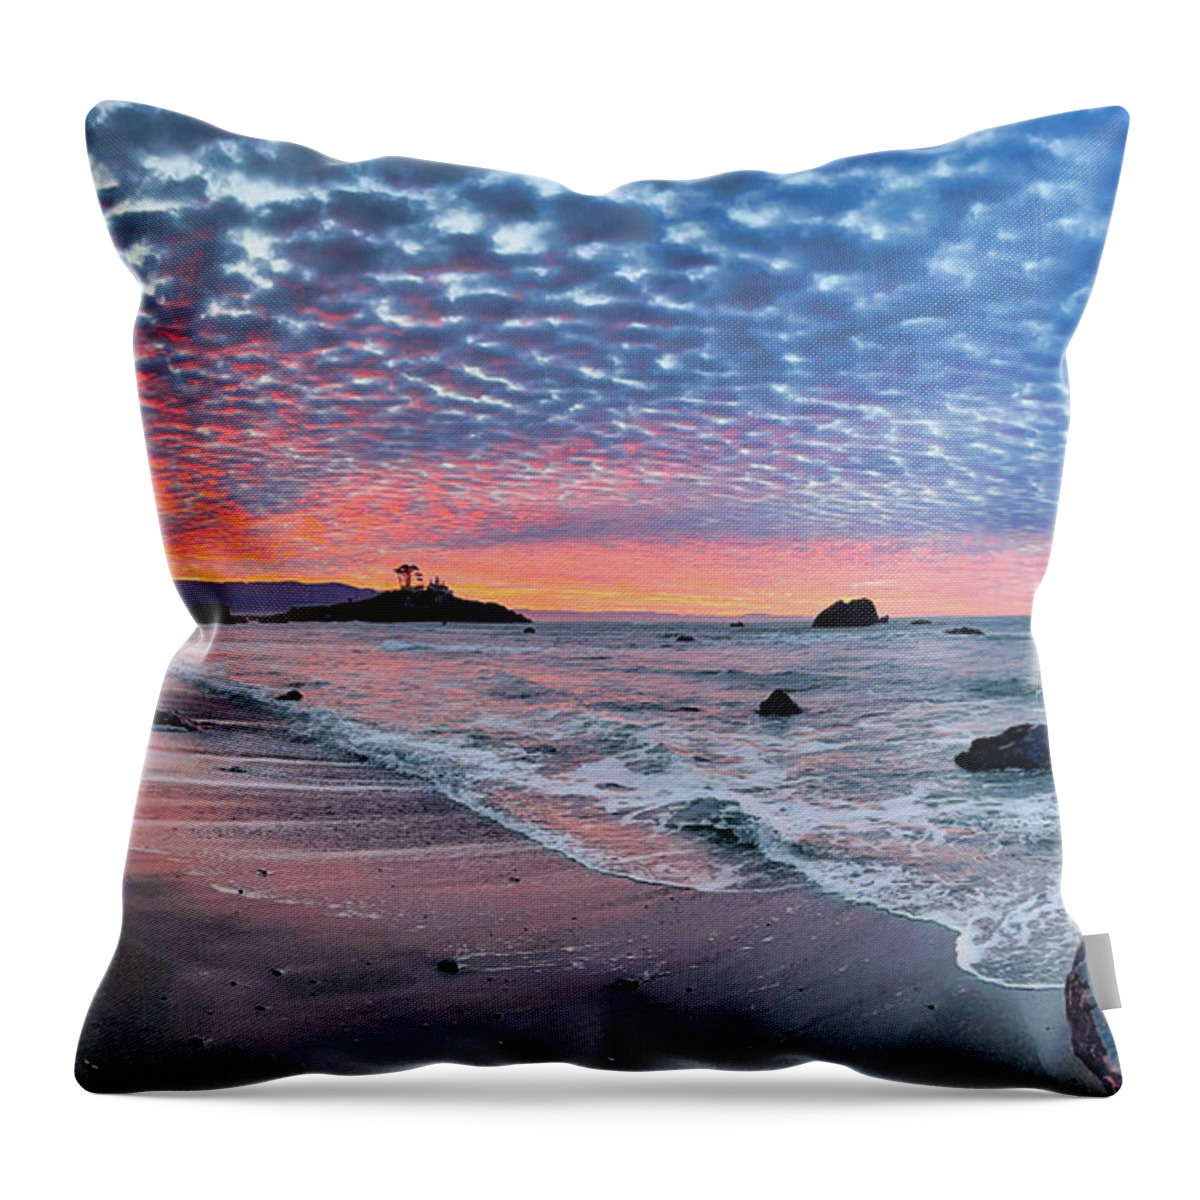 Crescent City Beach Sunrise Throw Pillow featuring the photograph Crescent City beach sunrise by Lynn Hopwood